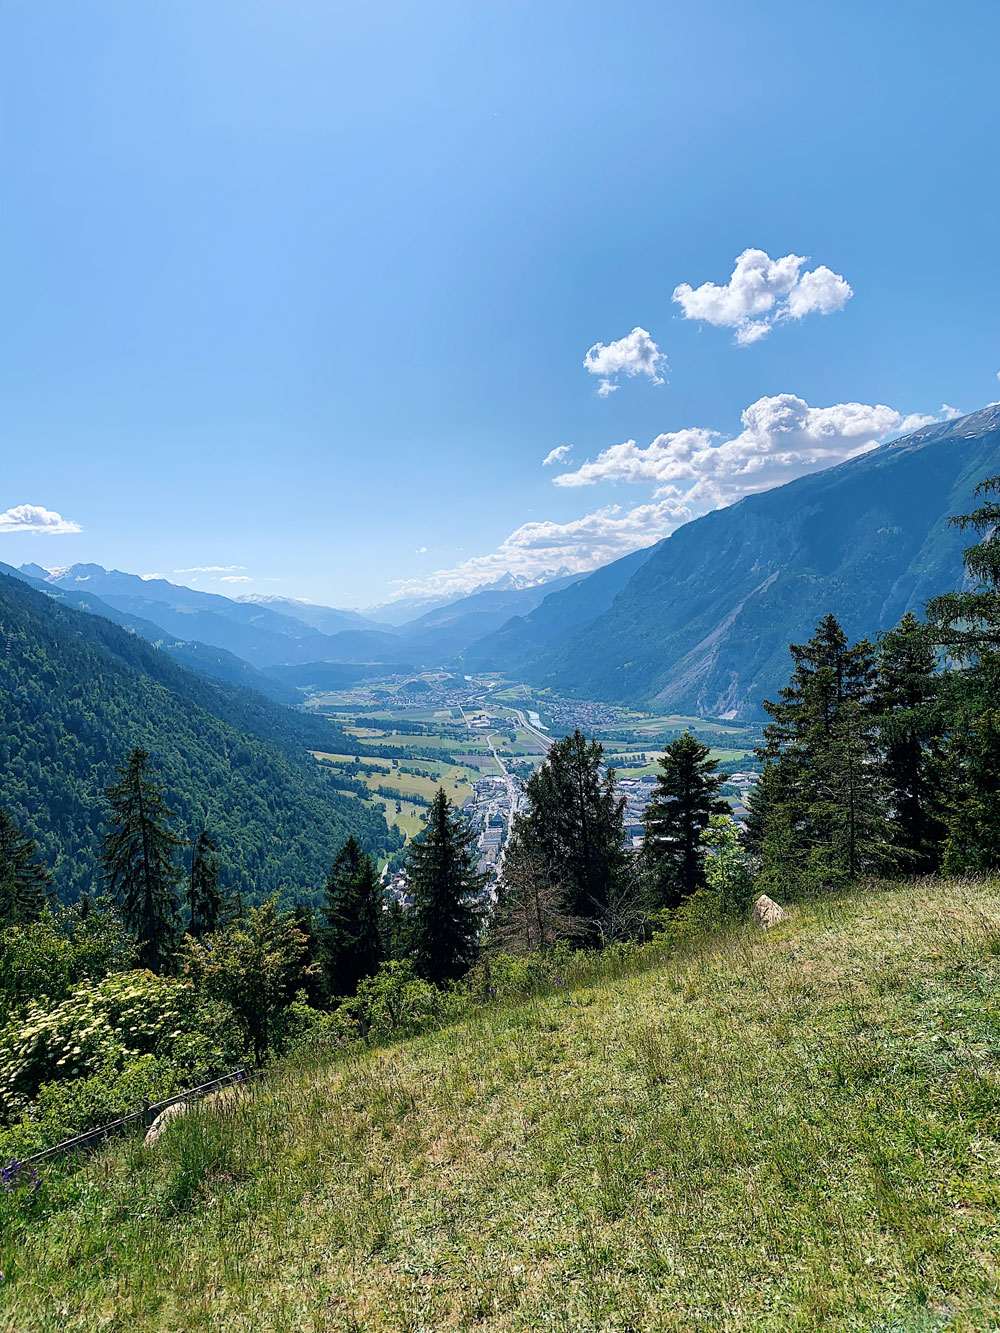 Sonrisa-x-NaturellyMichaela-x-Chur-Mittenberg Tour de Suisse: Chur - Welcome to my hometown!